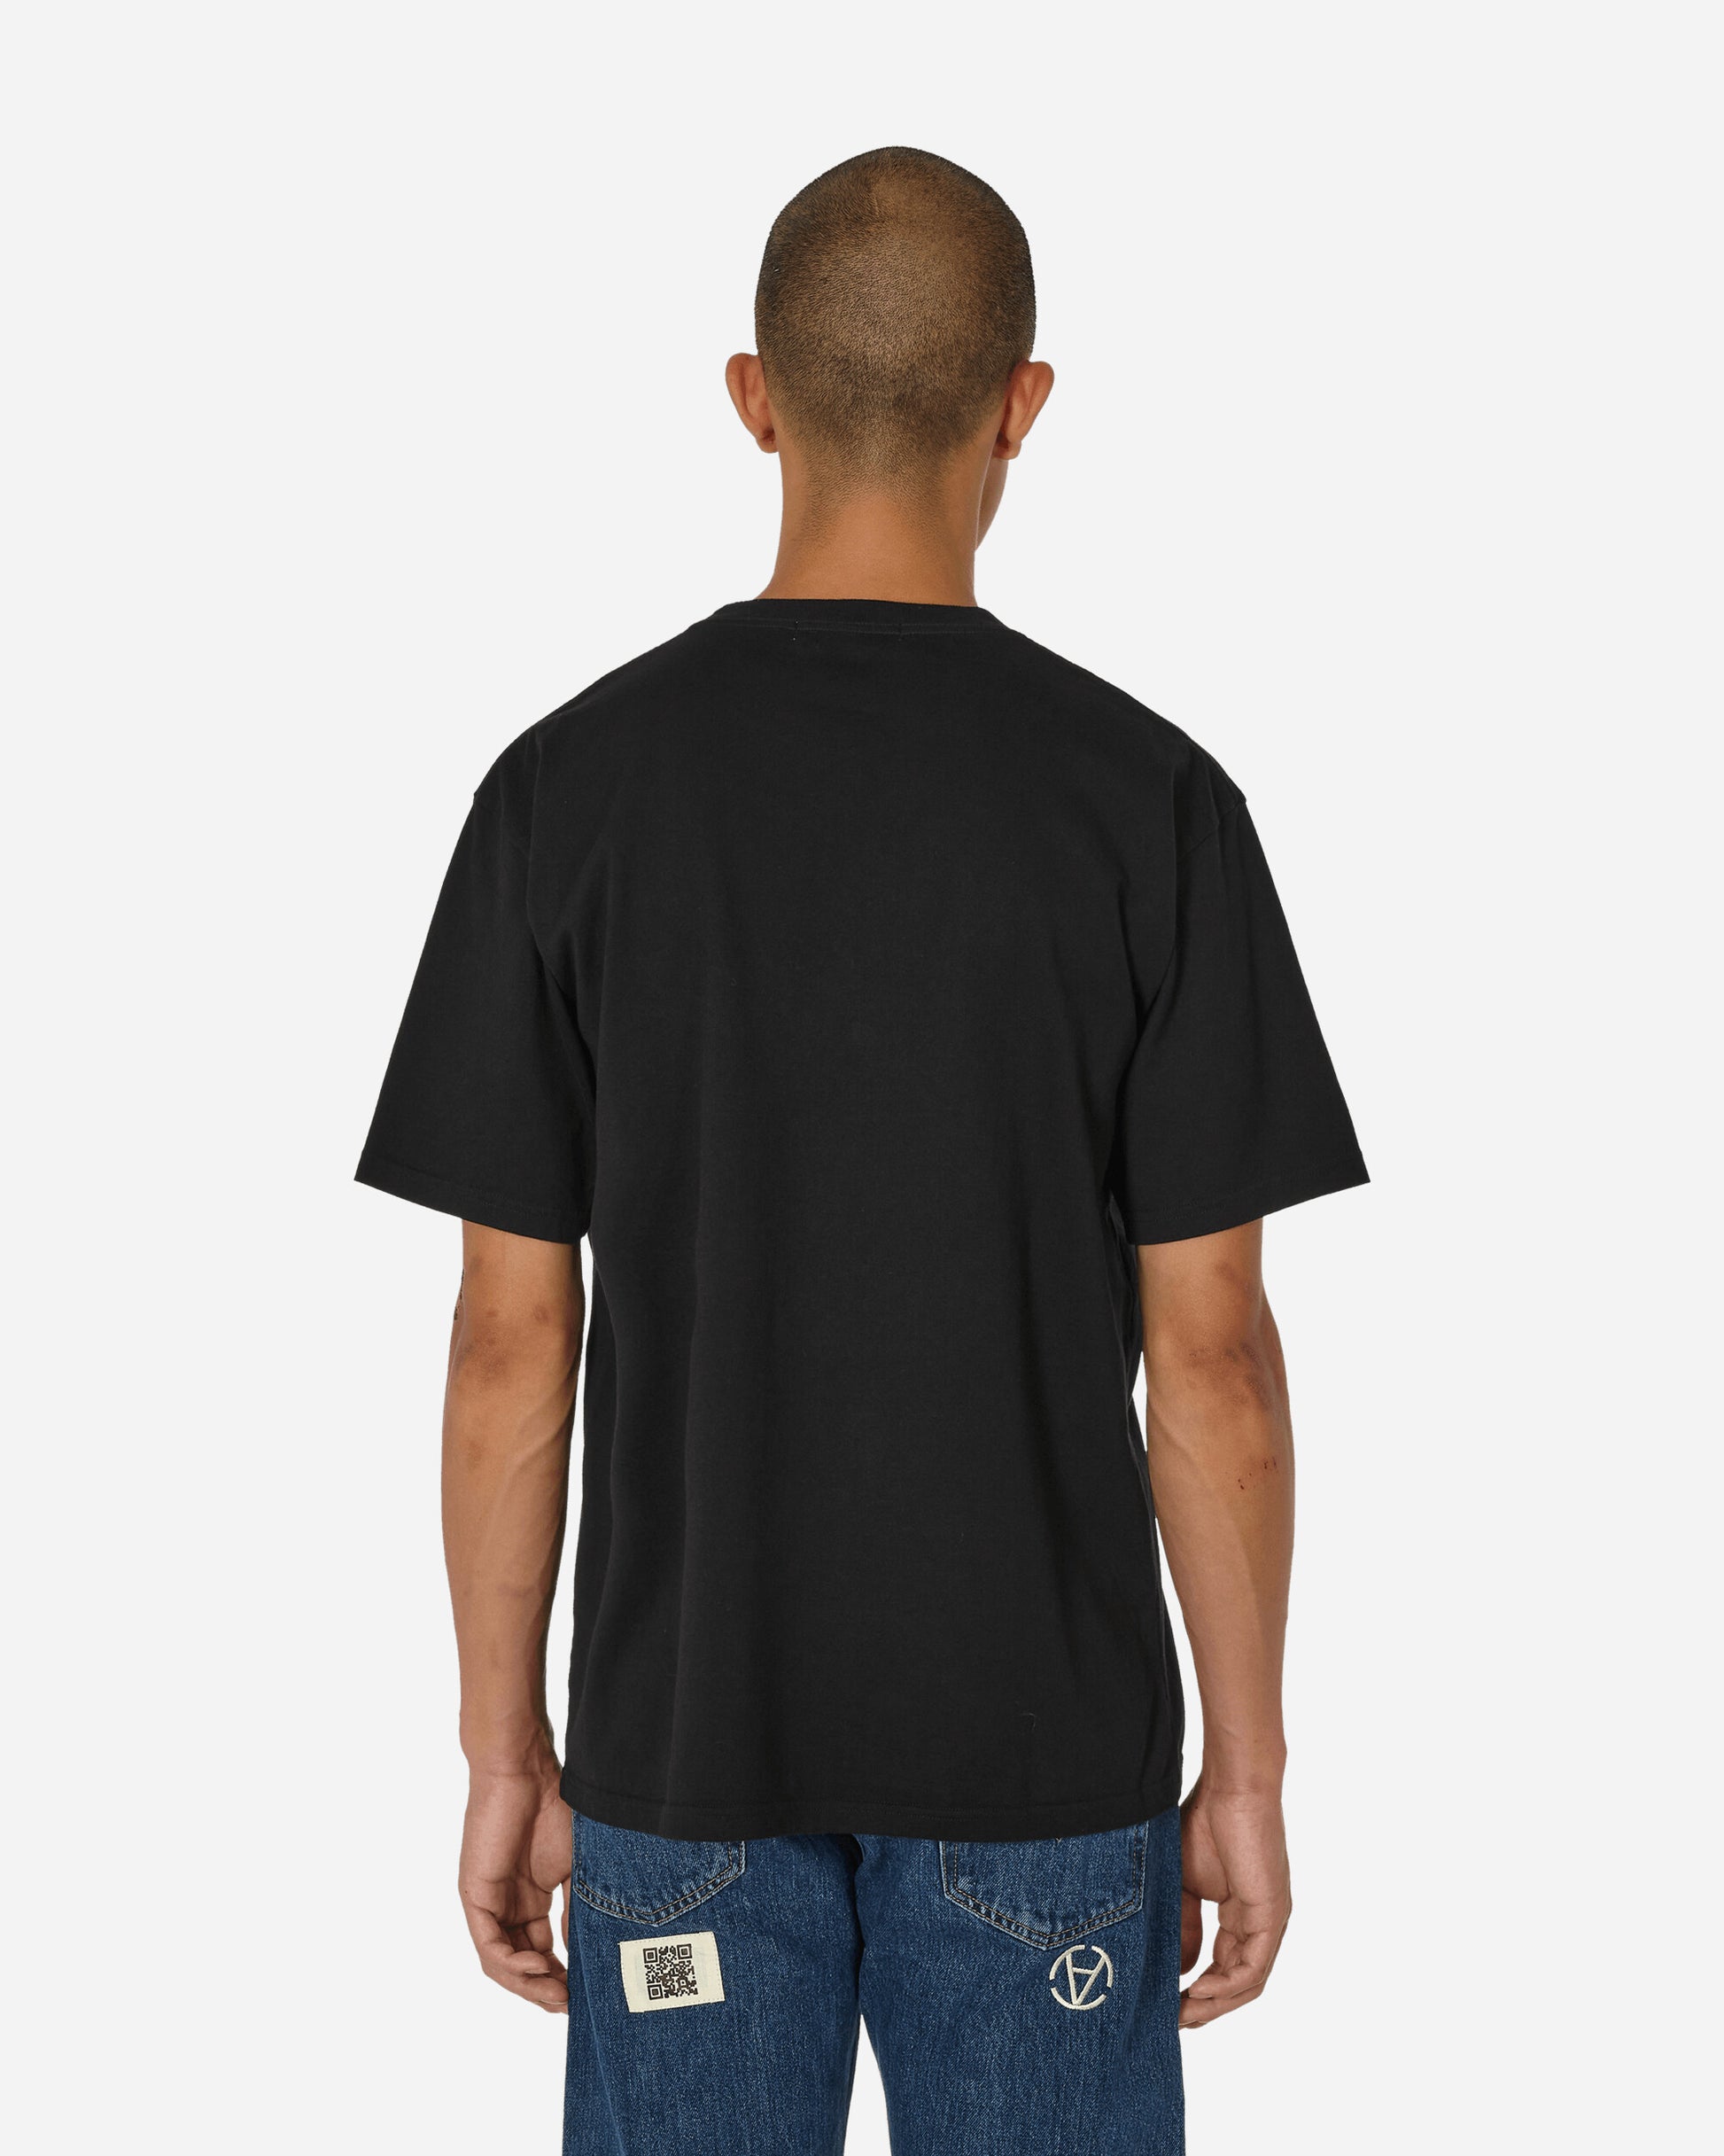 Undercover Rose T-Shirt Black T-Shirts Shortsleeve UC2C3807 1